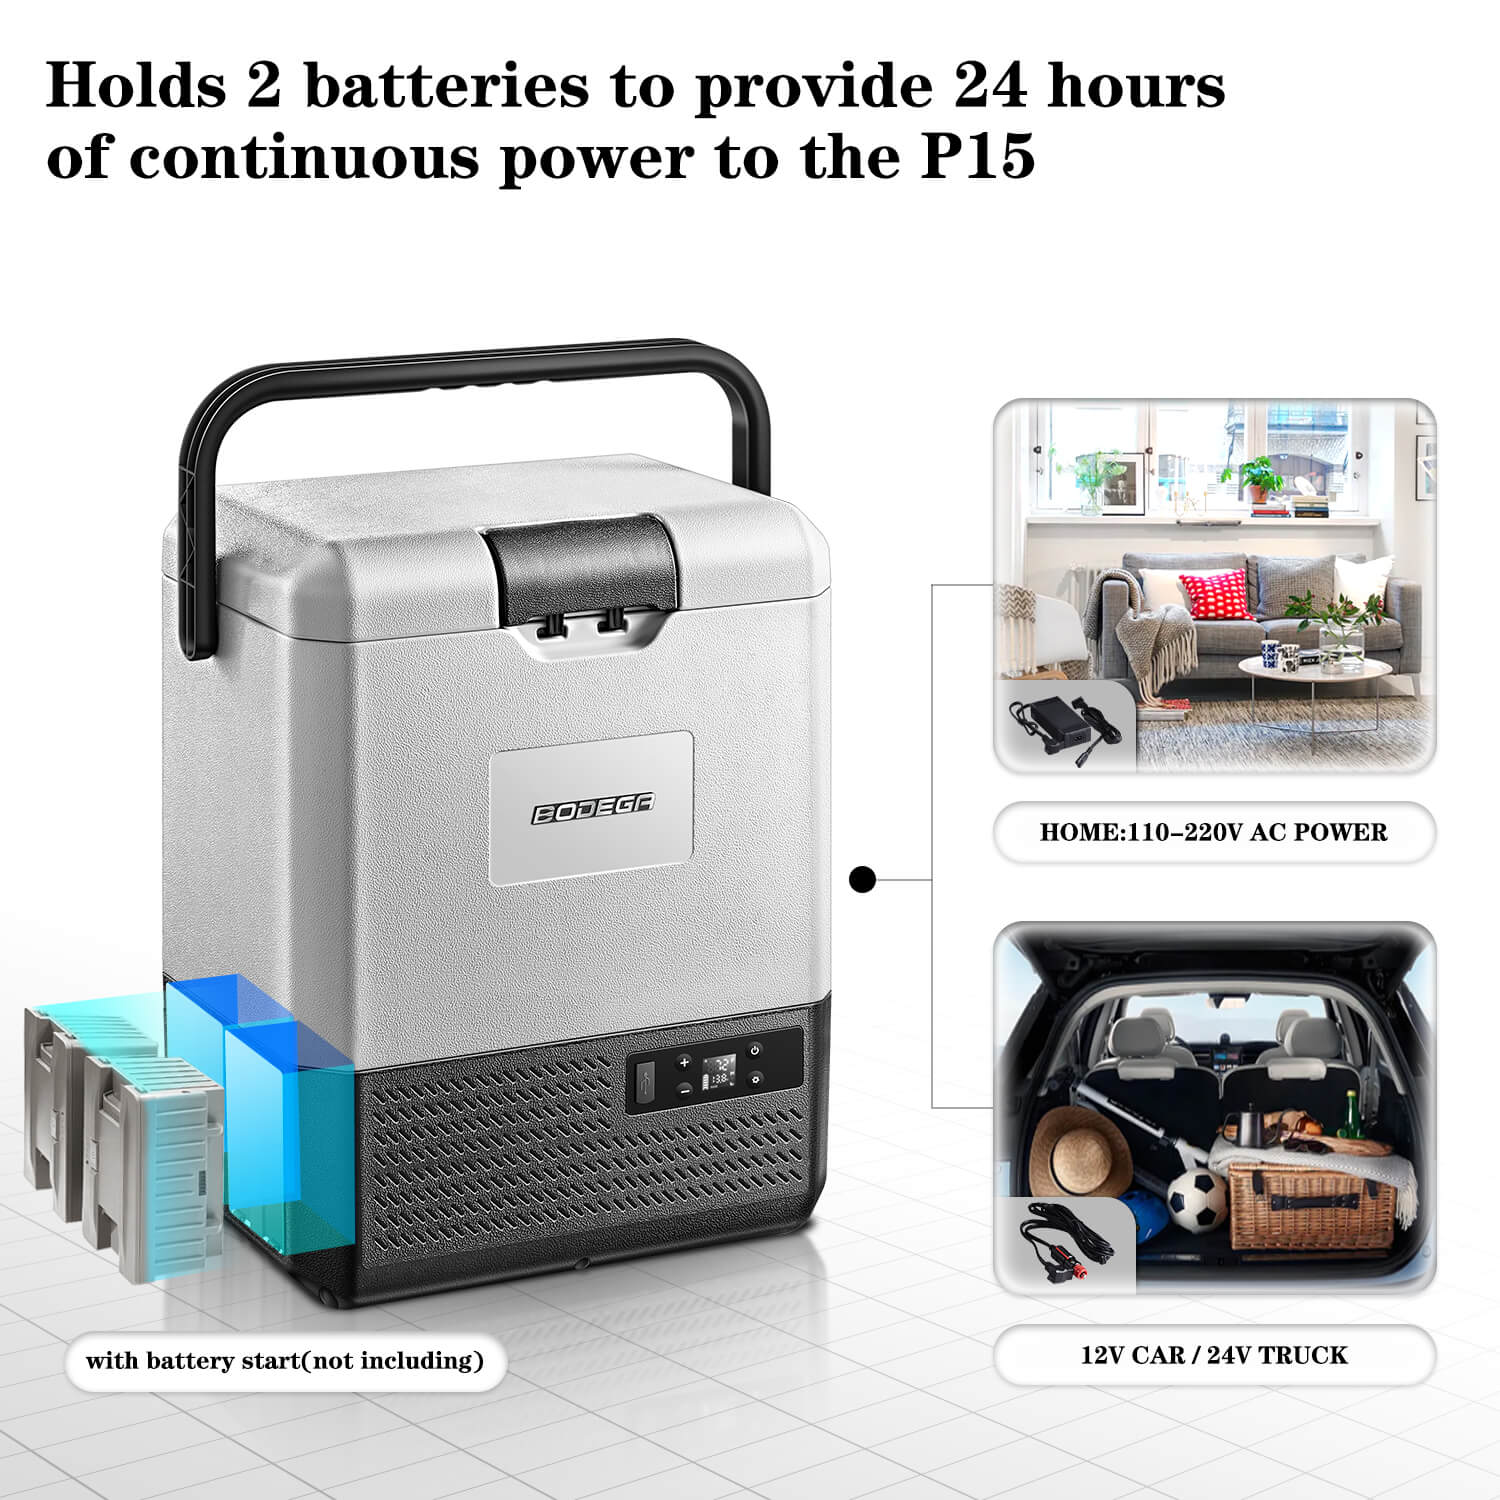 Battery powered mini fridge